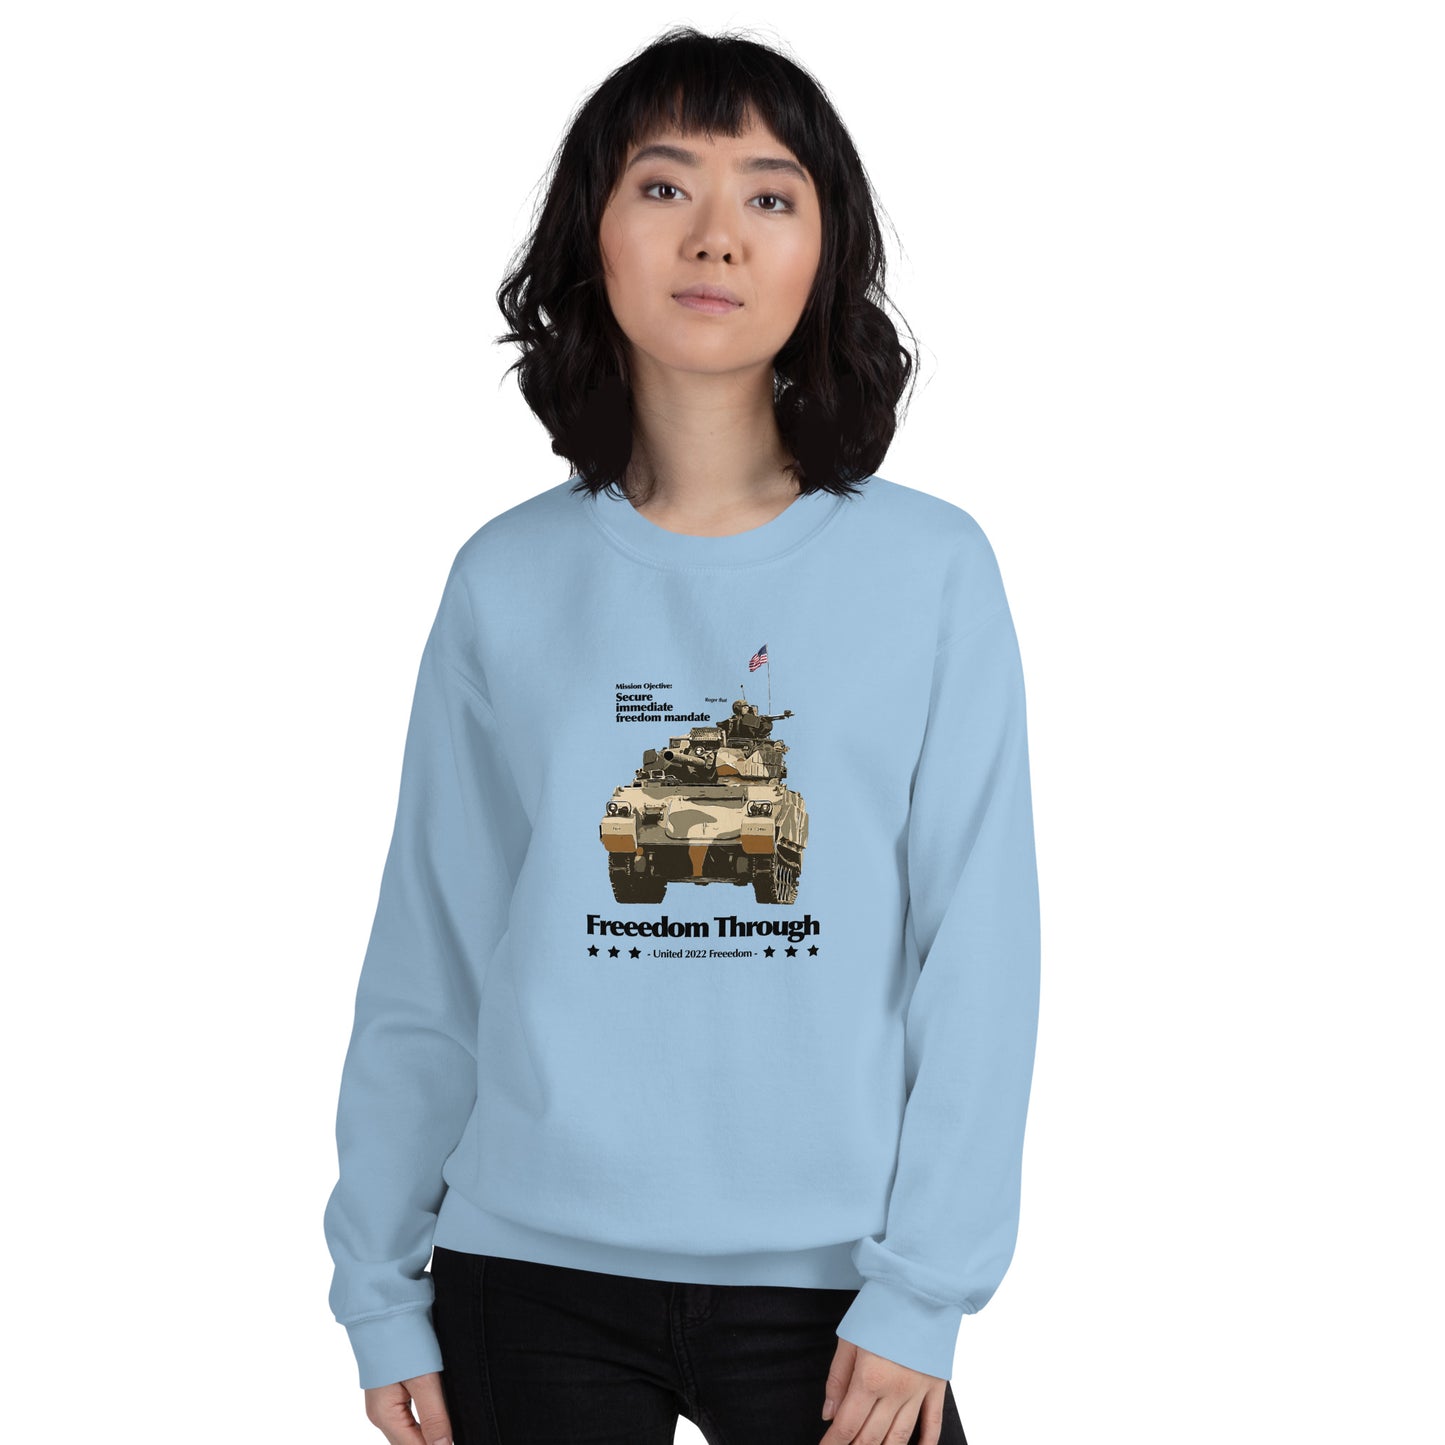 Freeedom Through Tank Sweatshirt